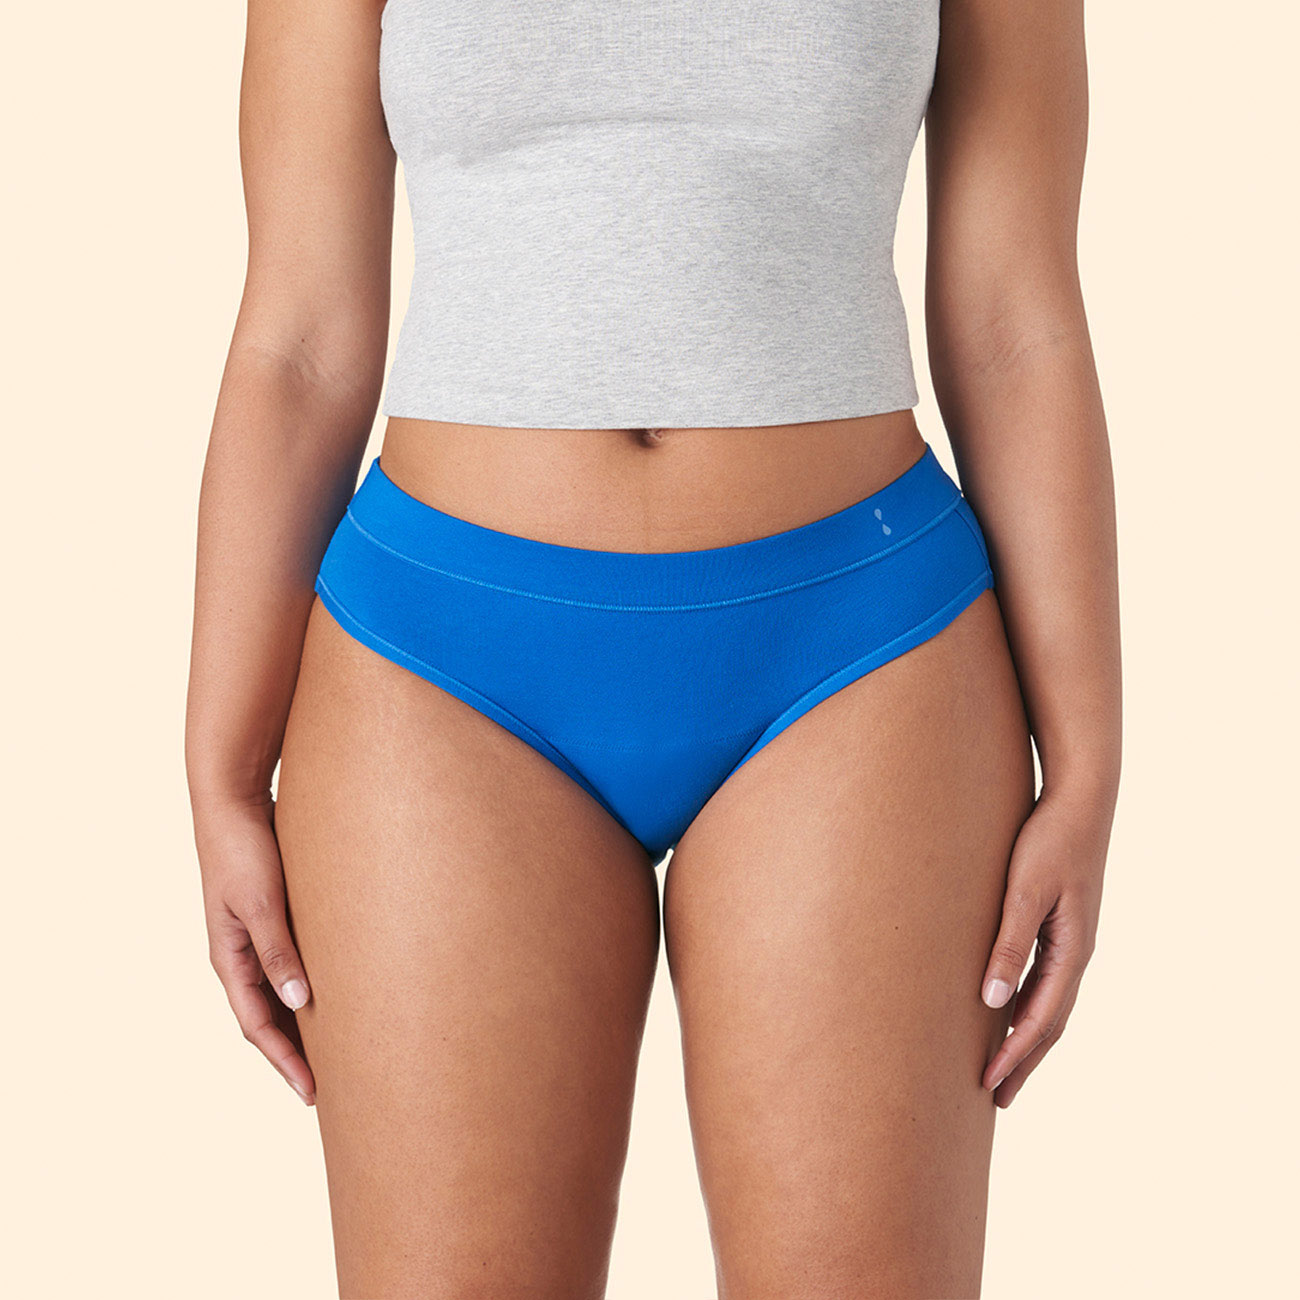 Thinx For All Women's Plus Size Moderate Absorbency Bikini Period Underwear  - Gray 4x : Target